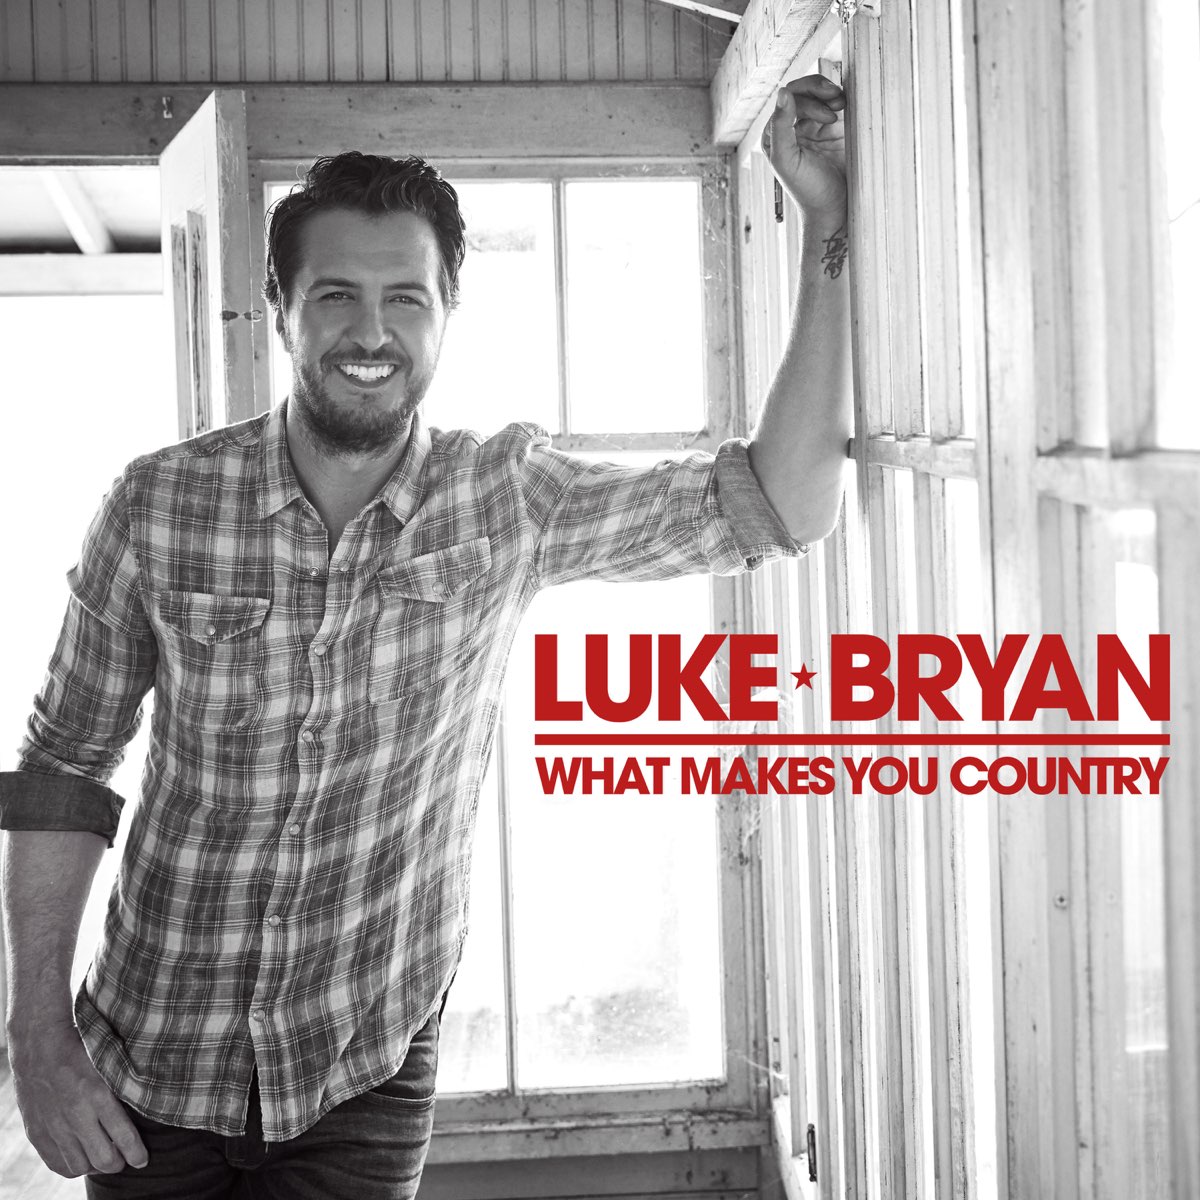 Luke bryan country on lyrics